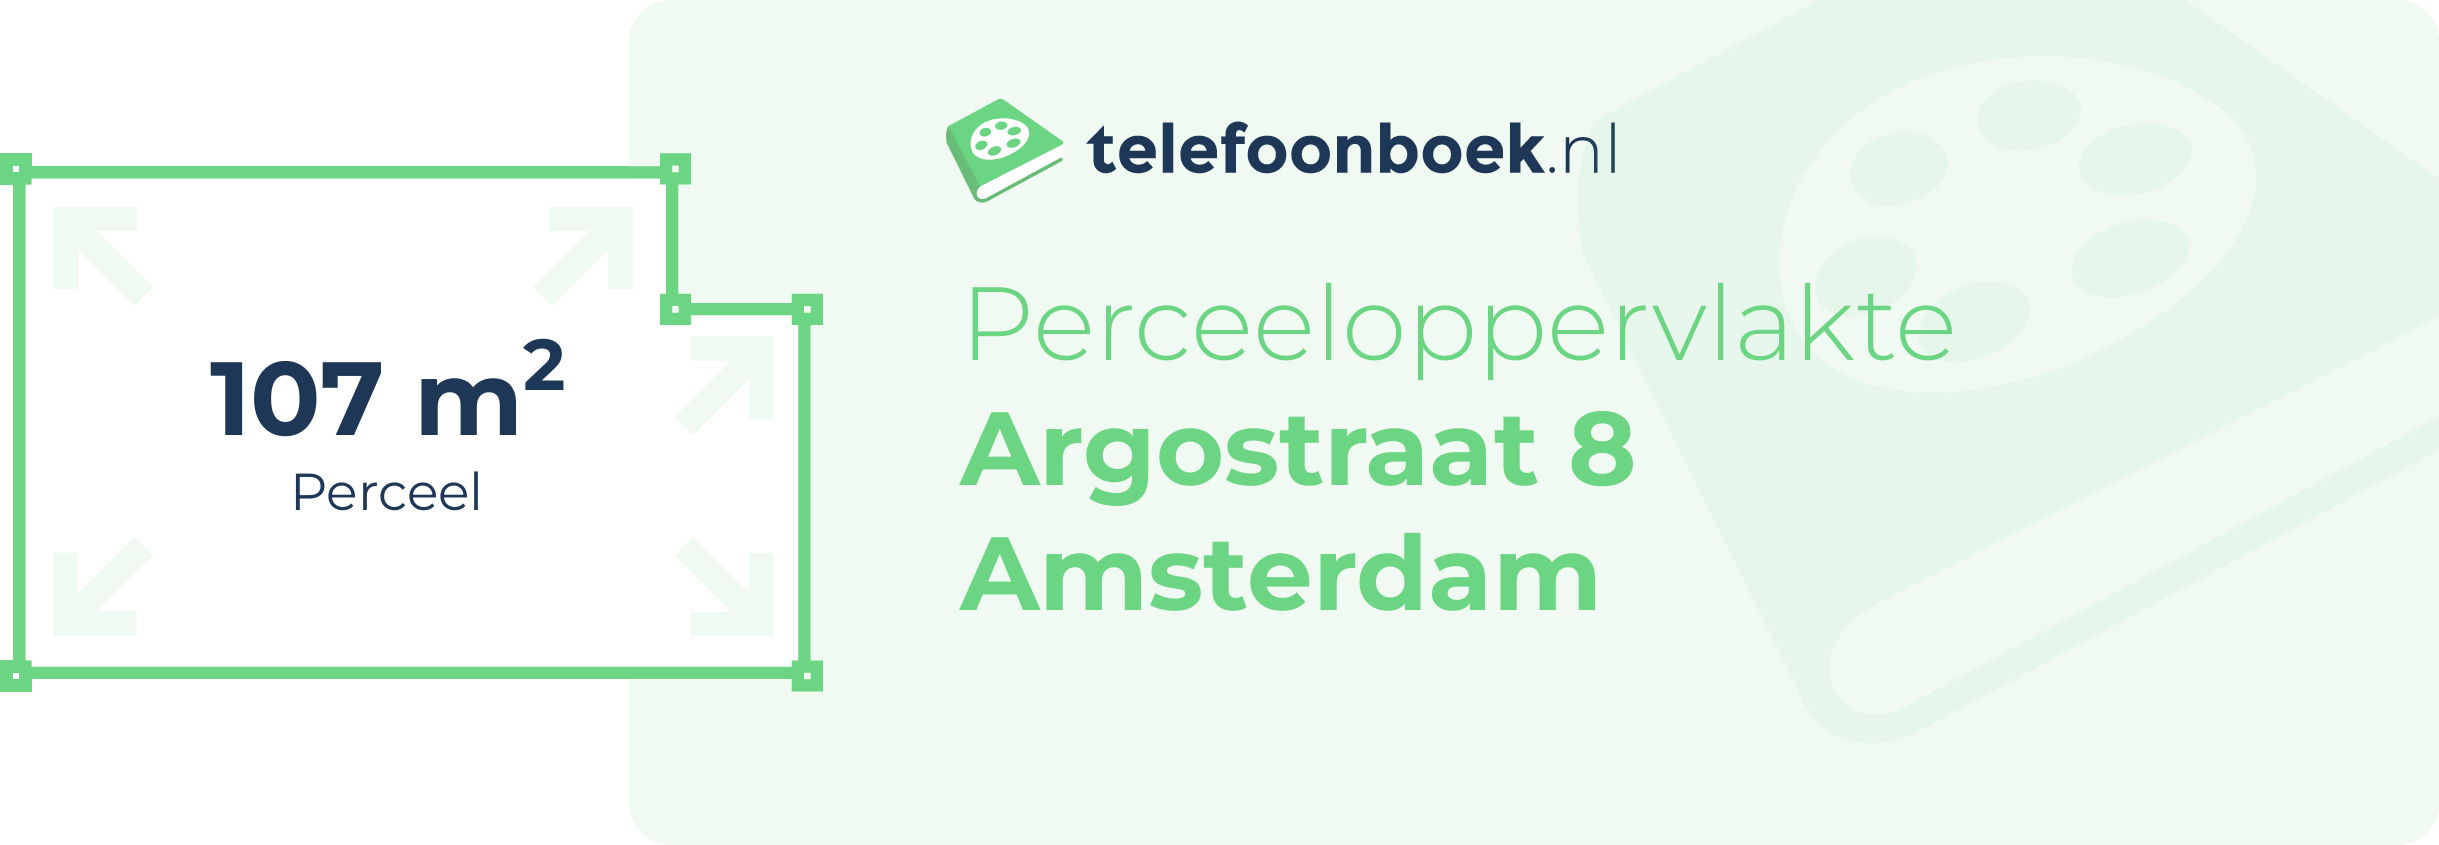 Perceeloppervlakte Argostraat 8 Amsterdam